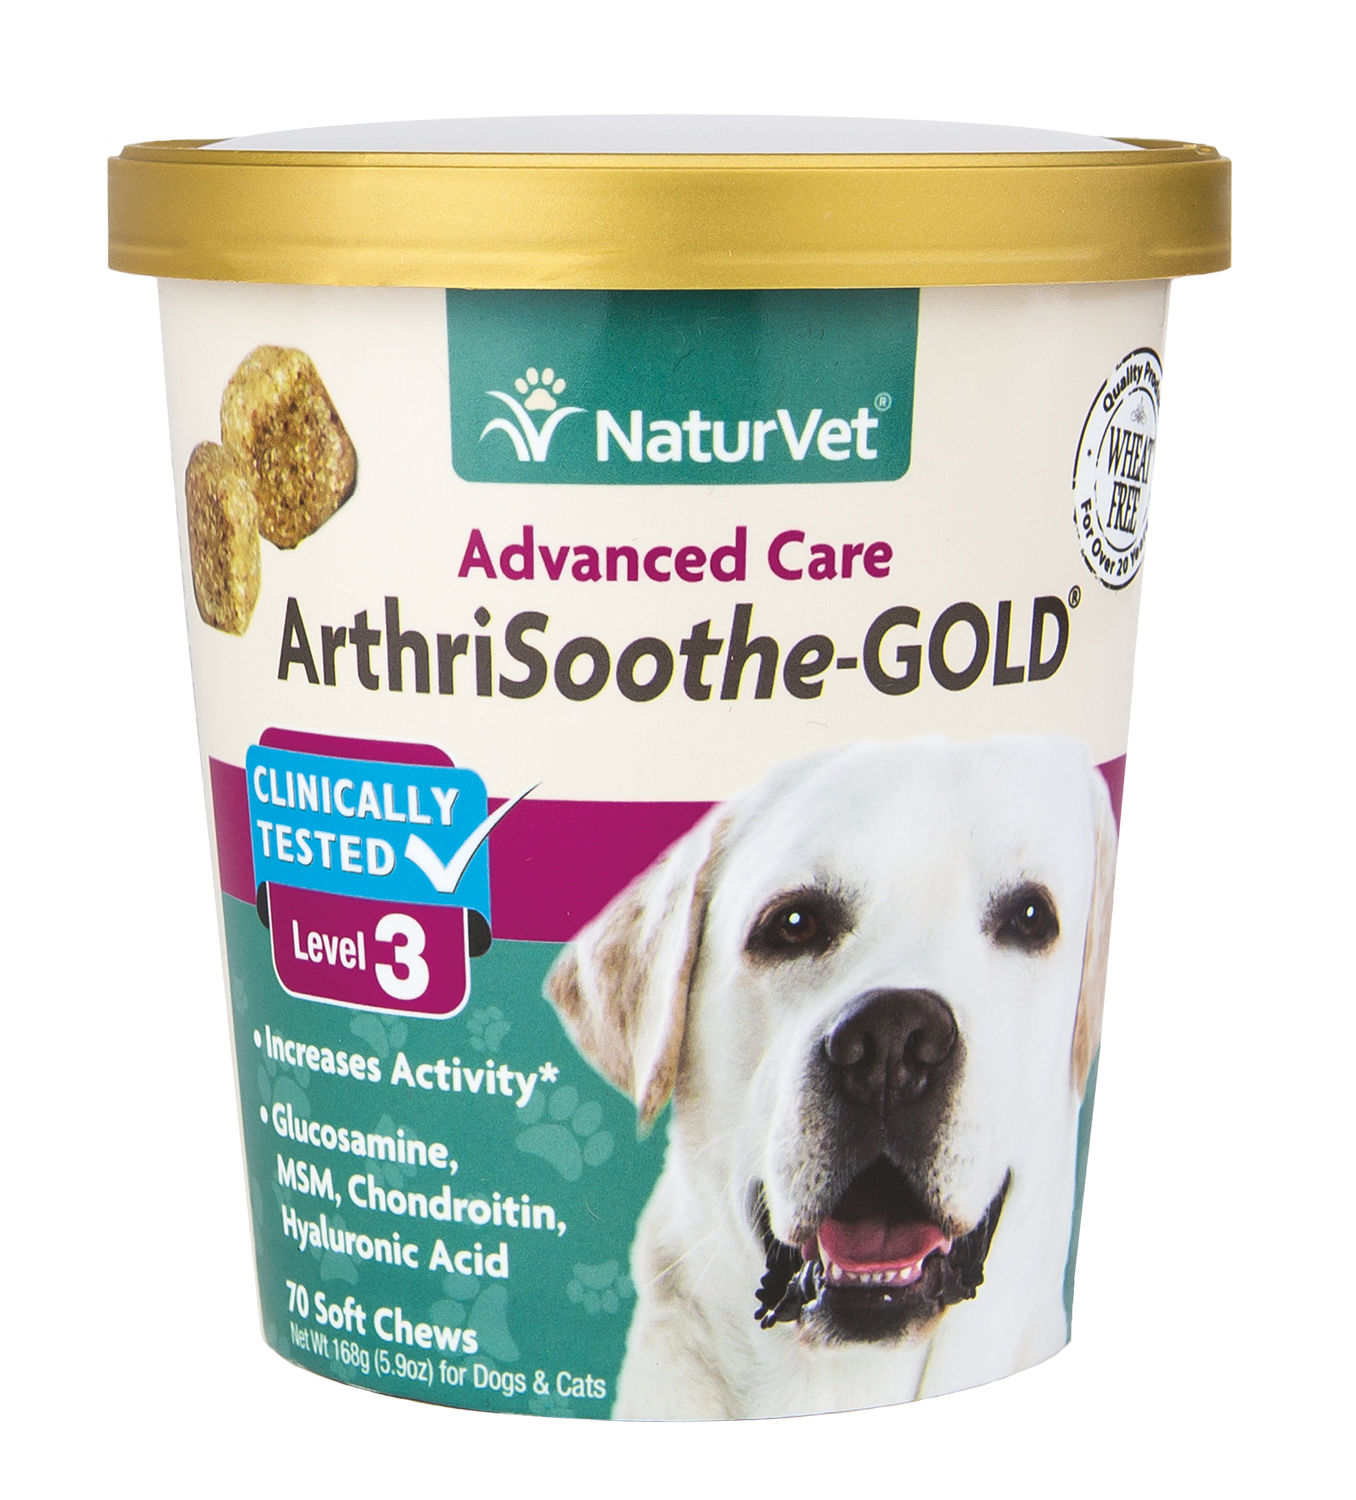 Naturvet Arthrisooth-GOLD Level 3 Soft Chews